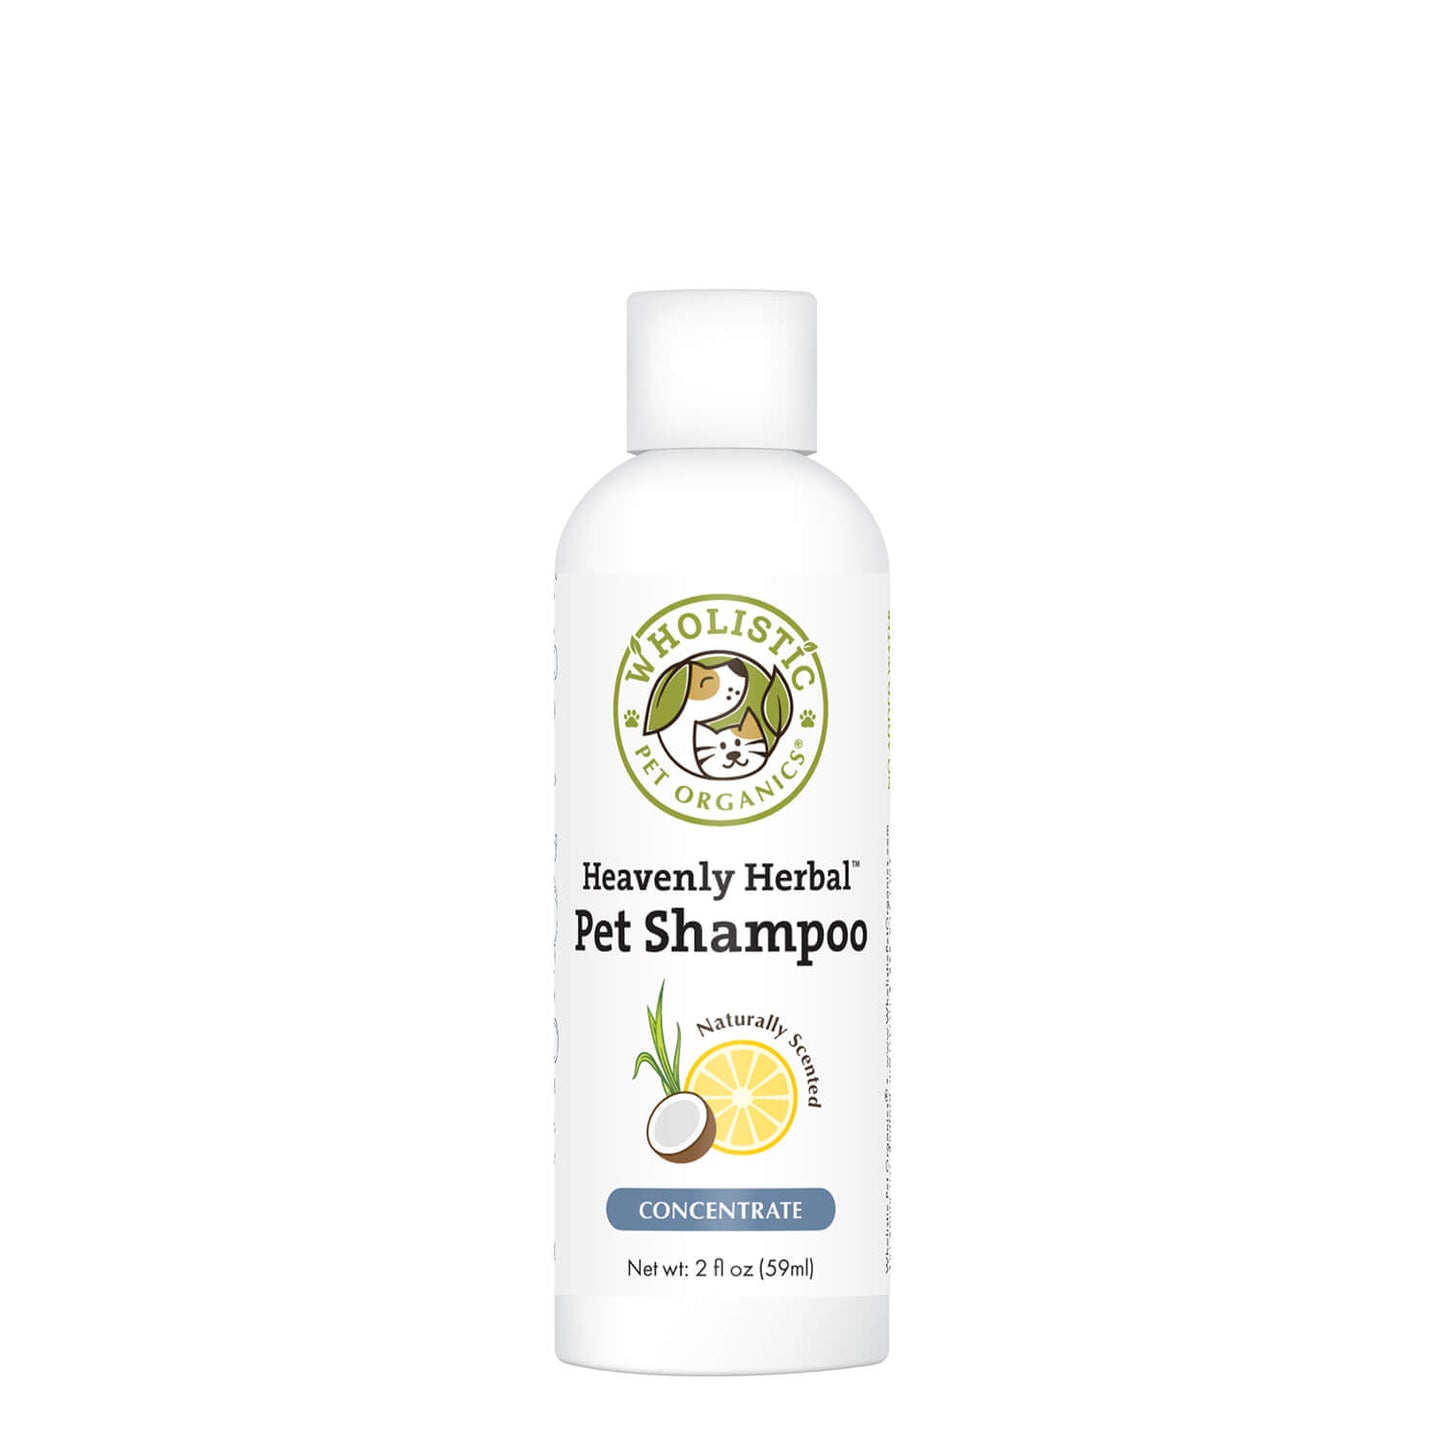 Heavenly Herbal™ Pet Shampoo